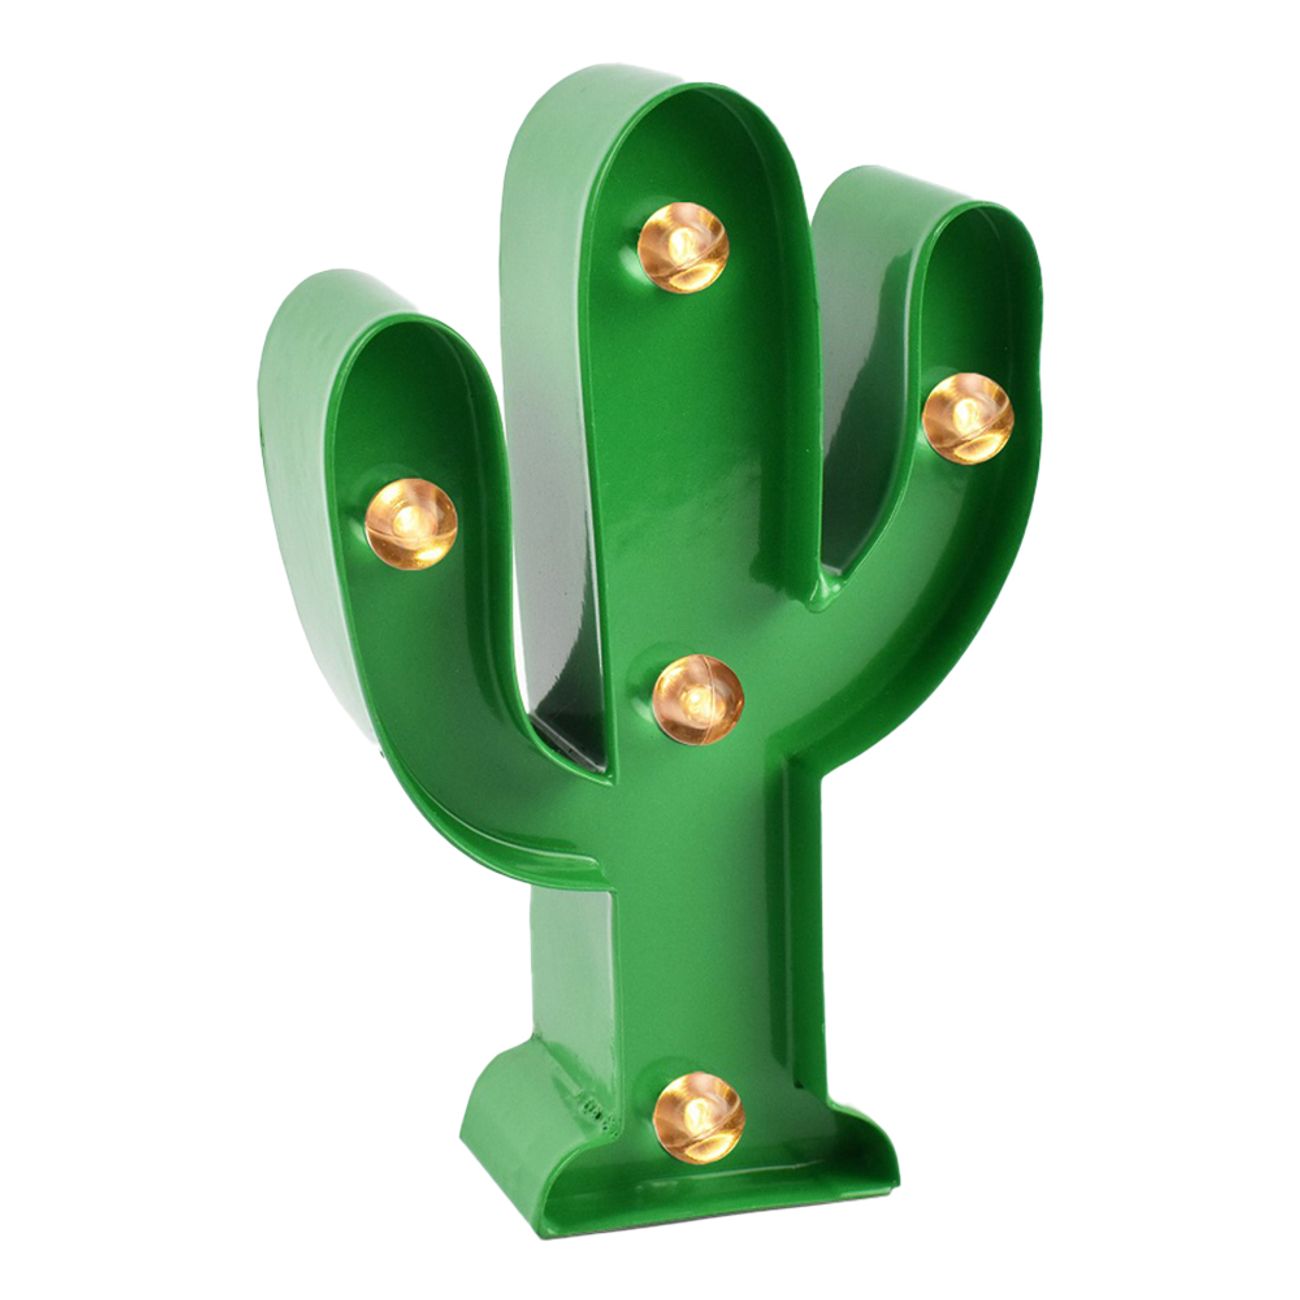 dekorativ-minilampa-kaktus-72832-1